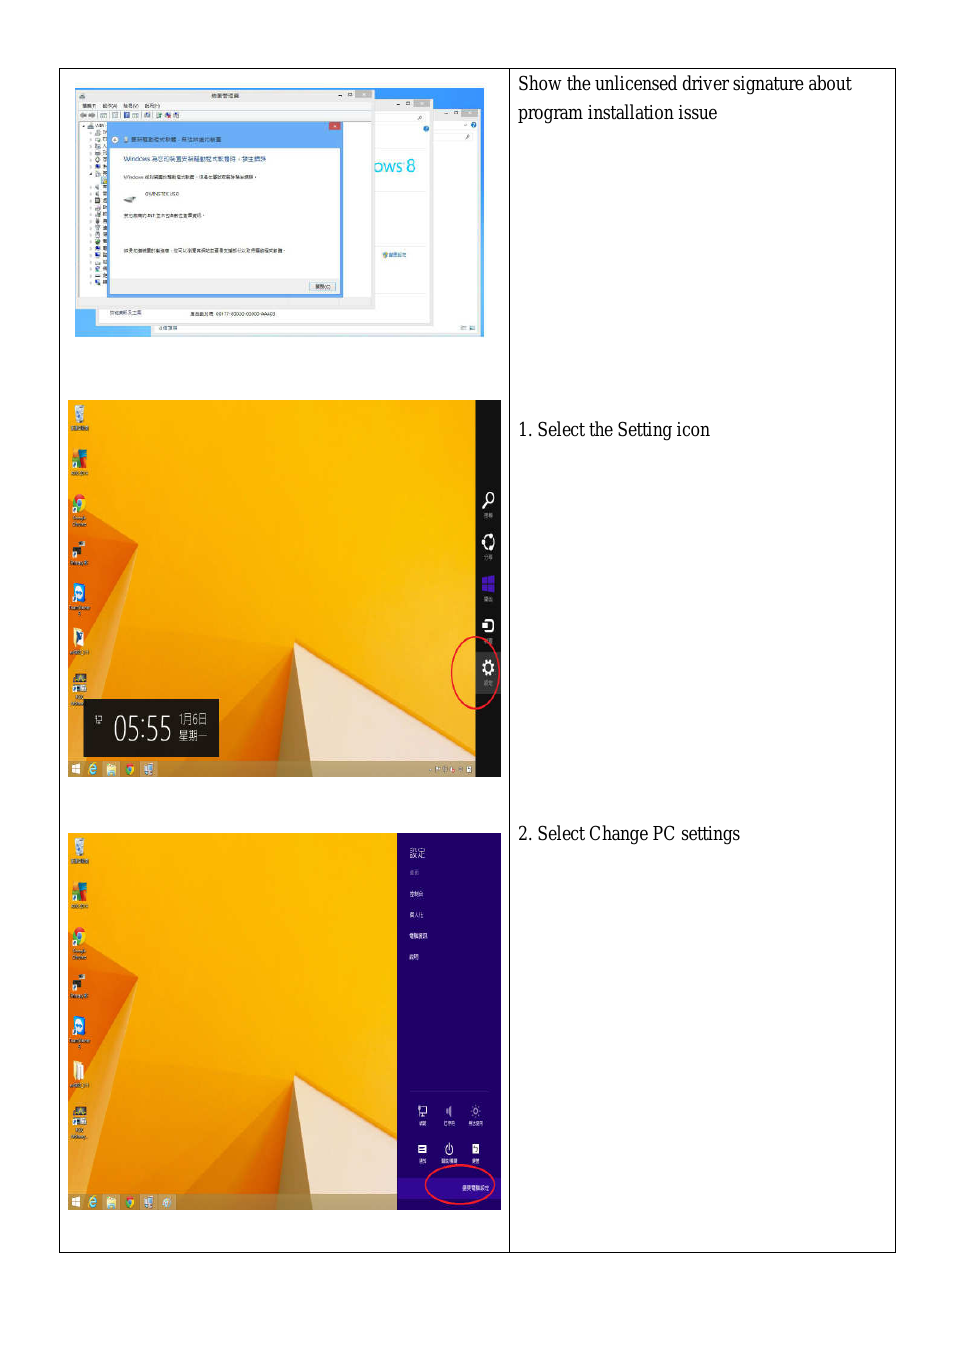 USG-Series Installation Issue of Windows 8.1